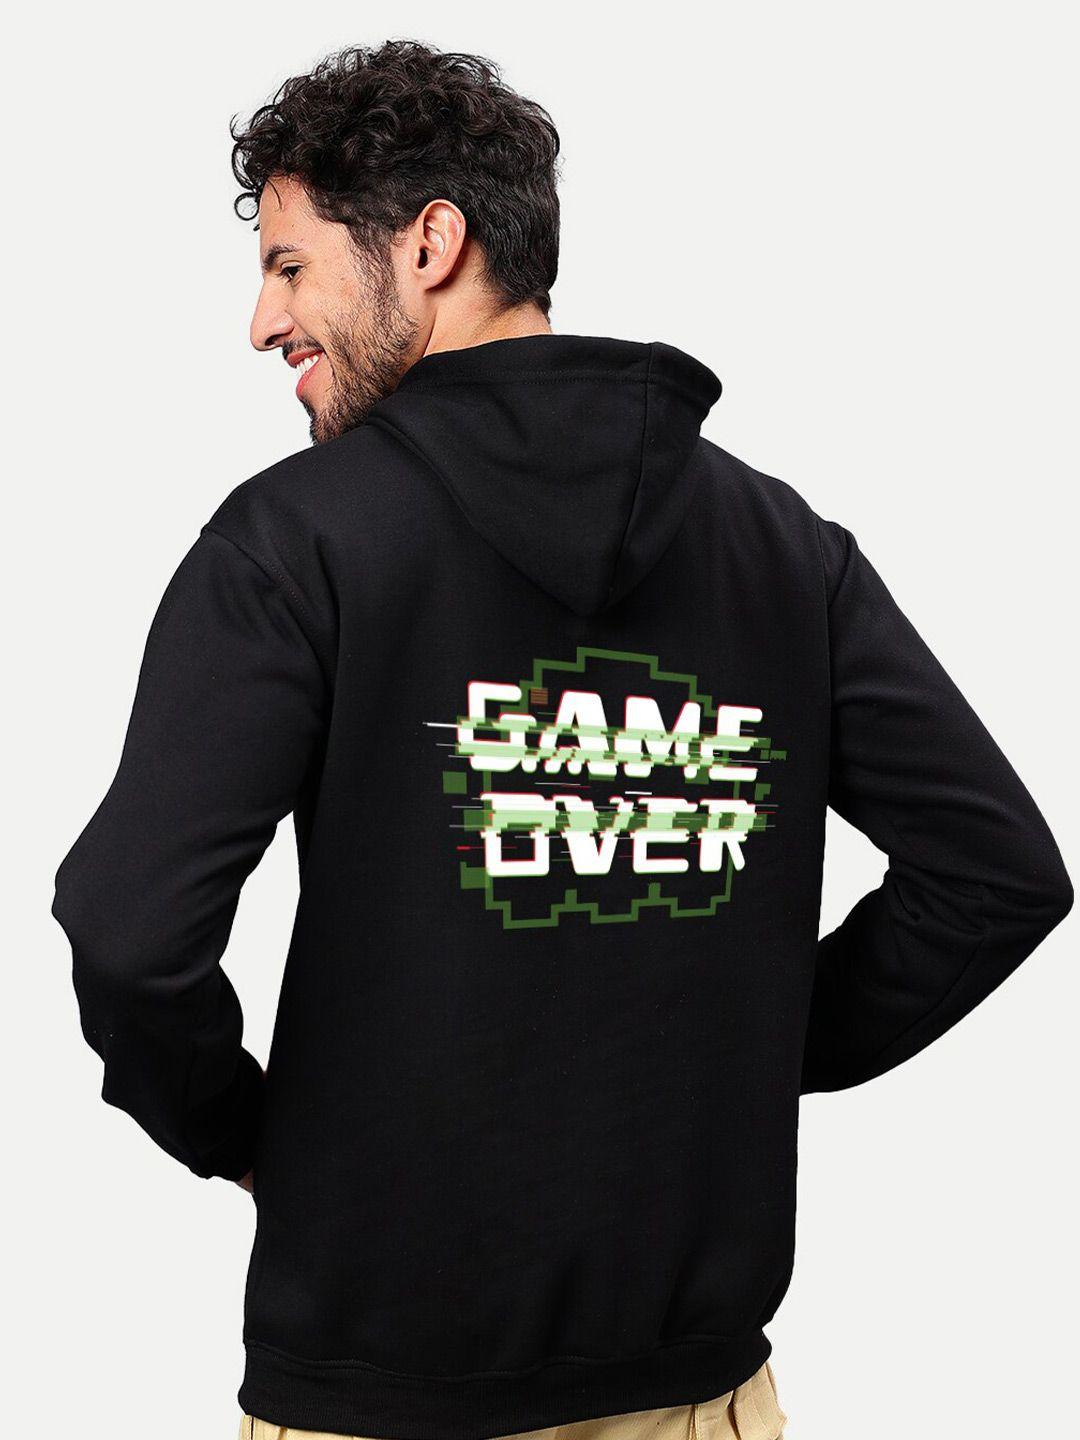 mad over print typography printed hooded fleece pullover sweatshirt